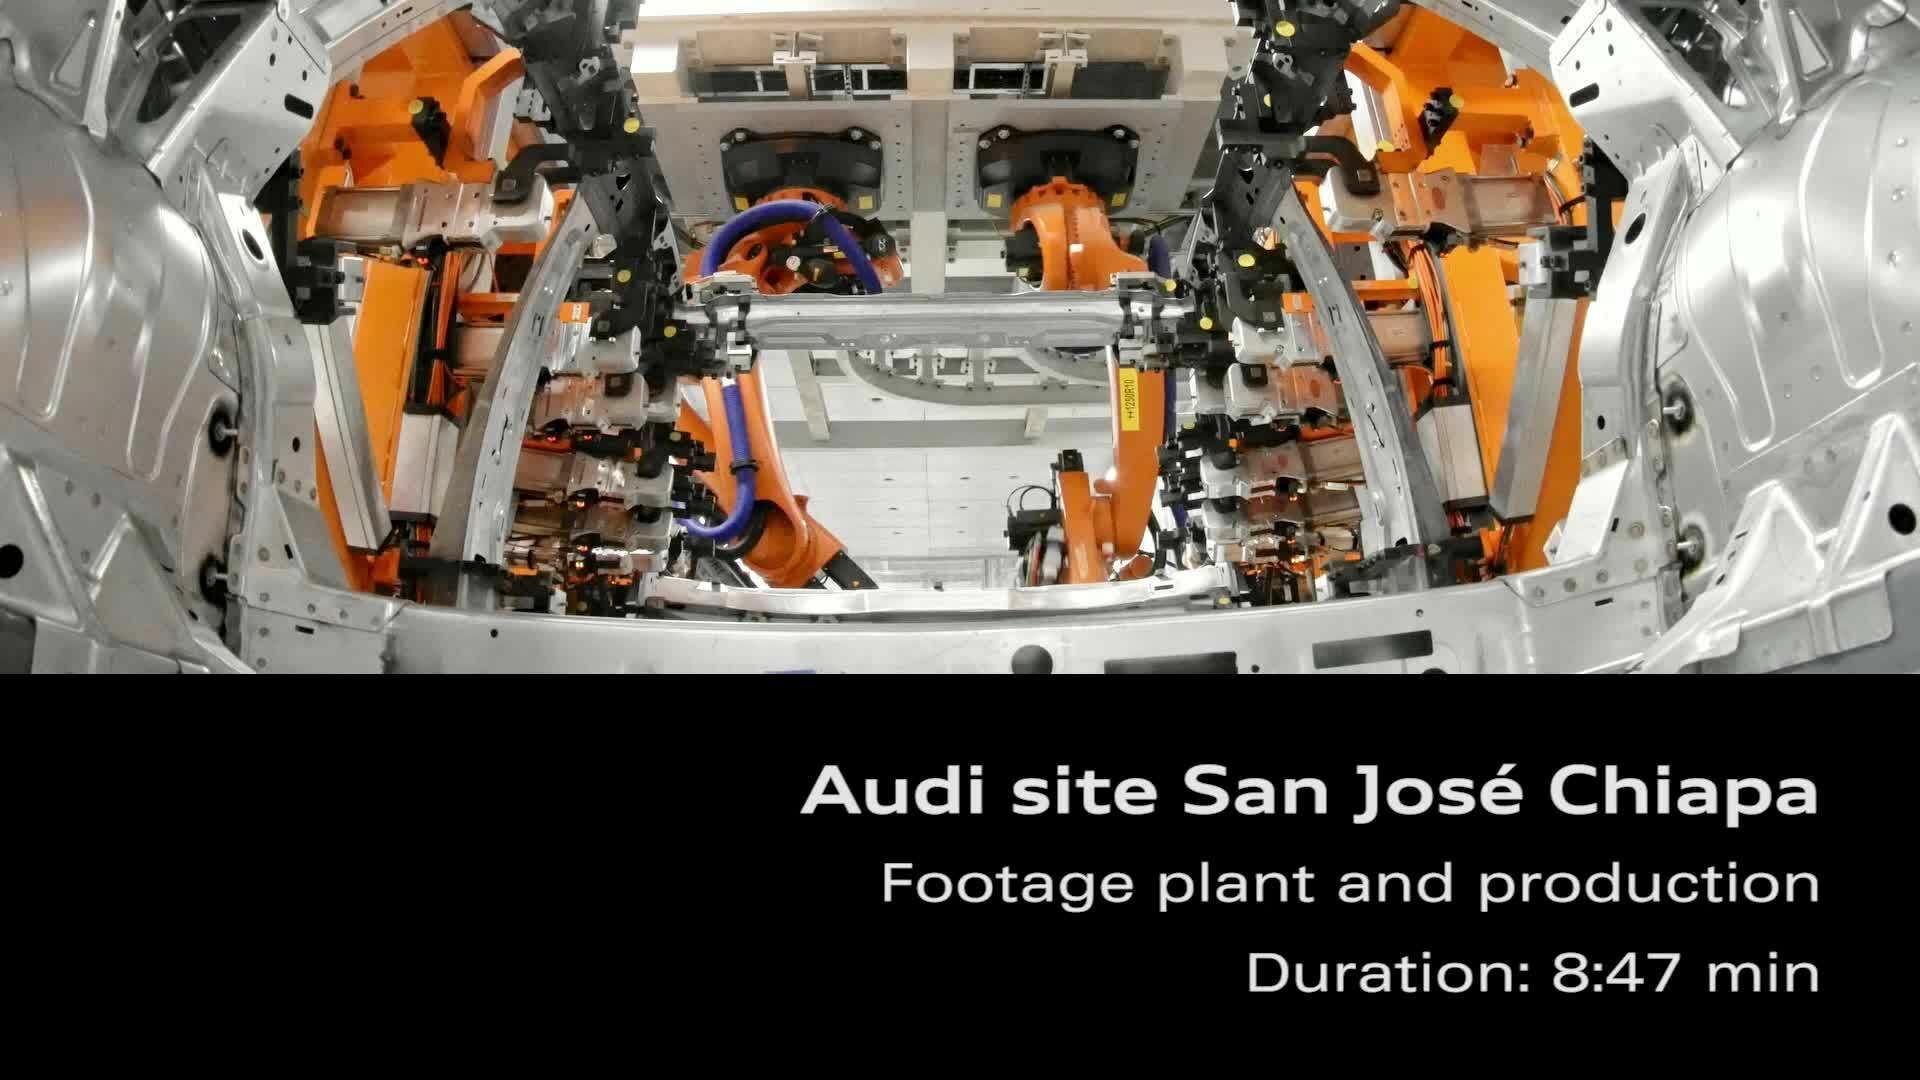 Audi site Mexico – Footage